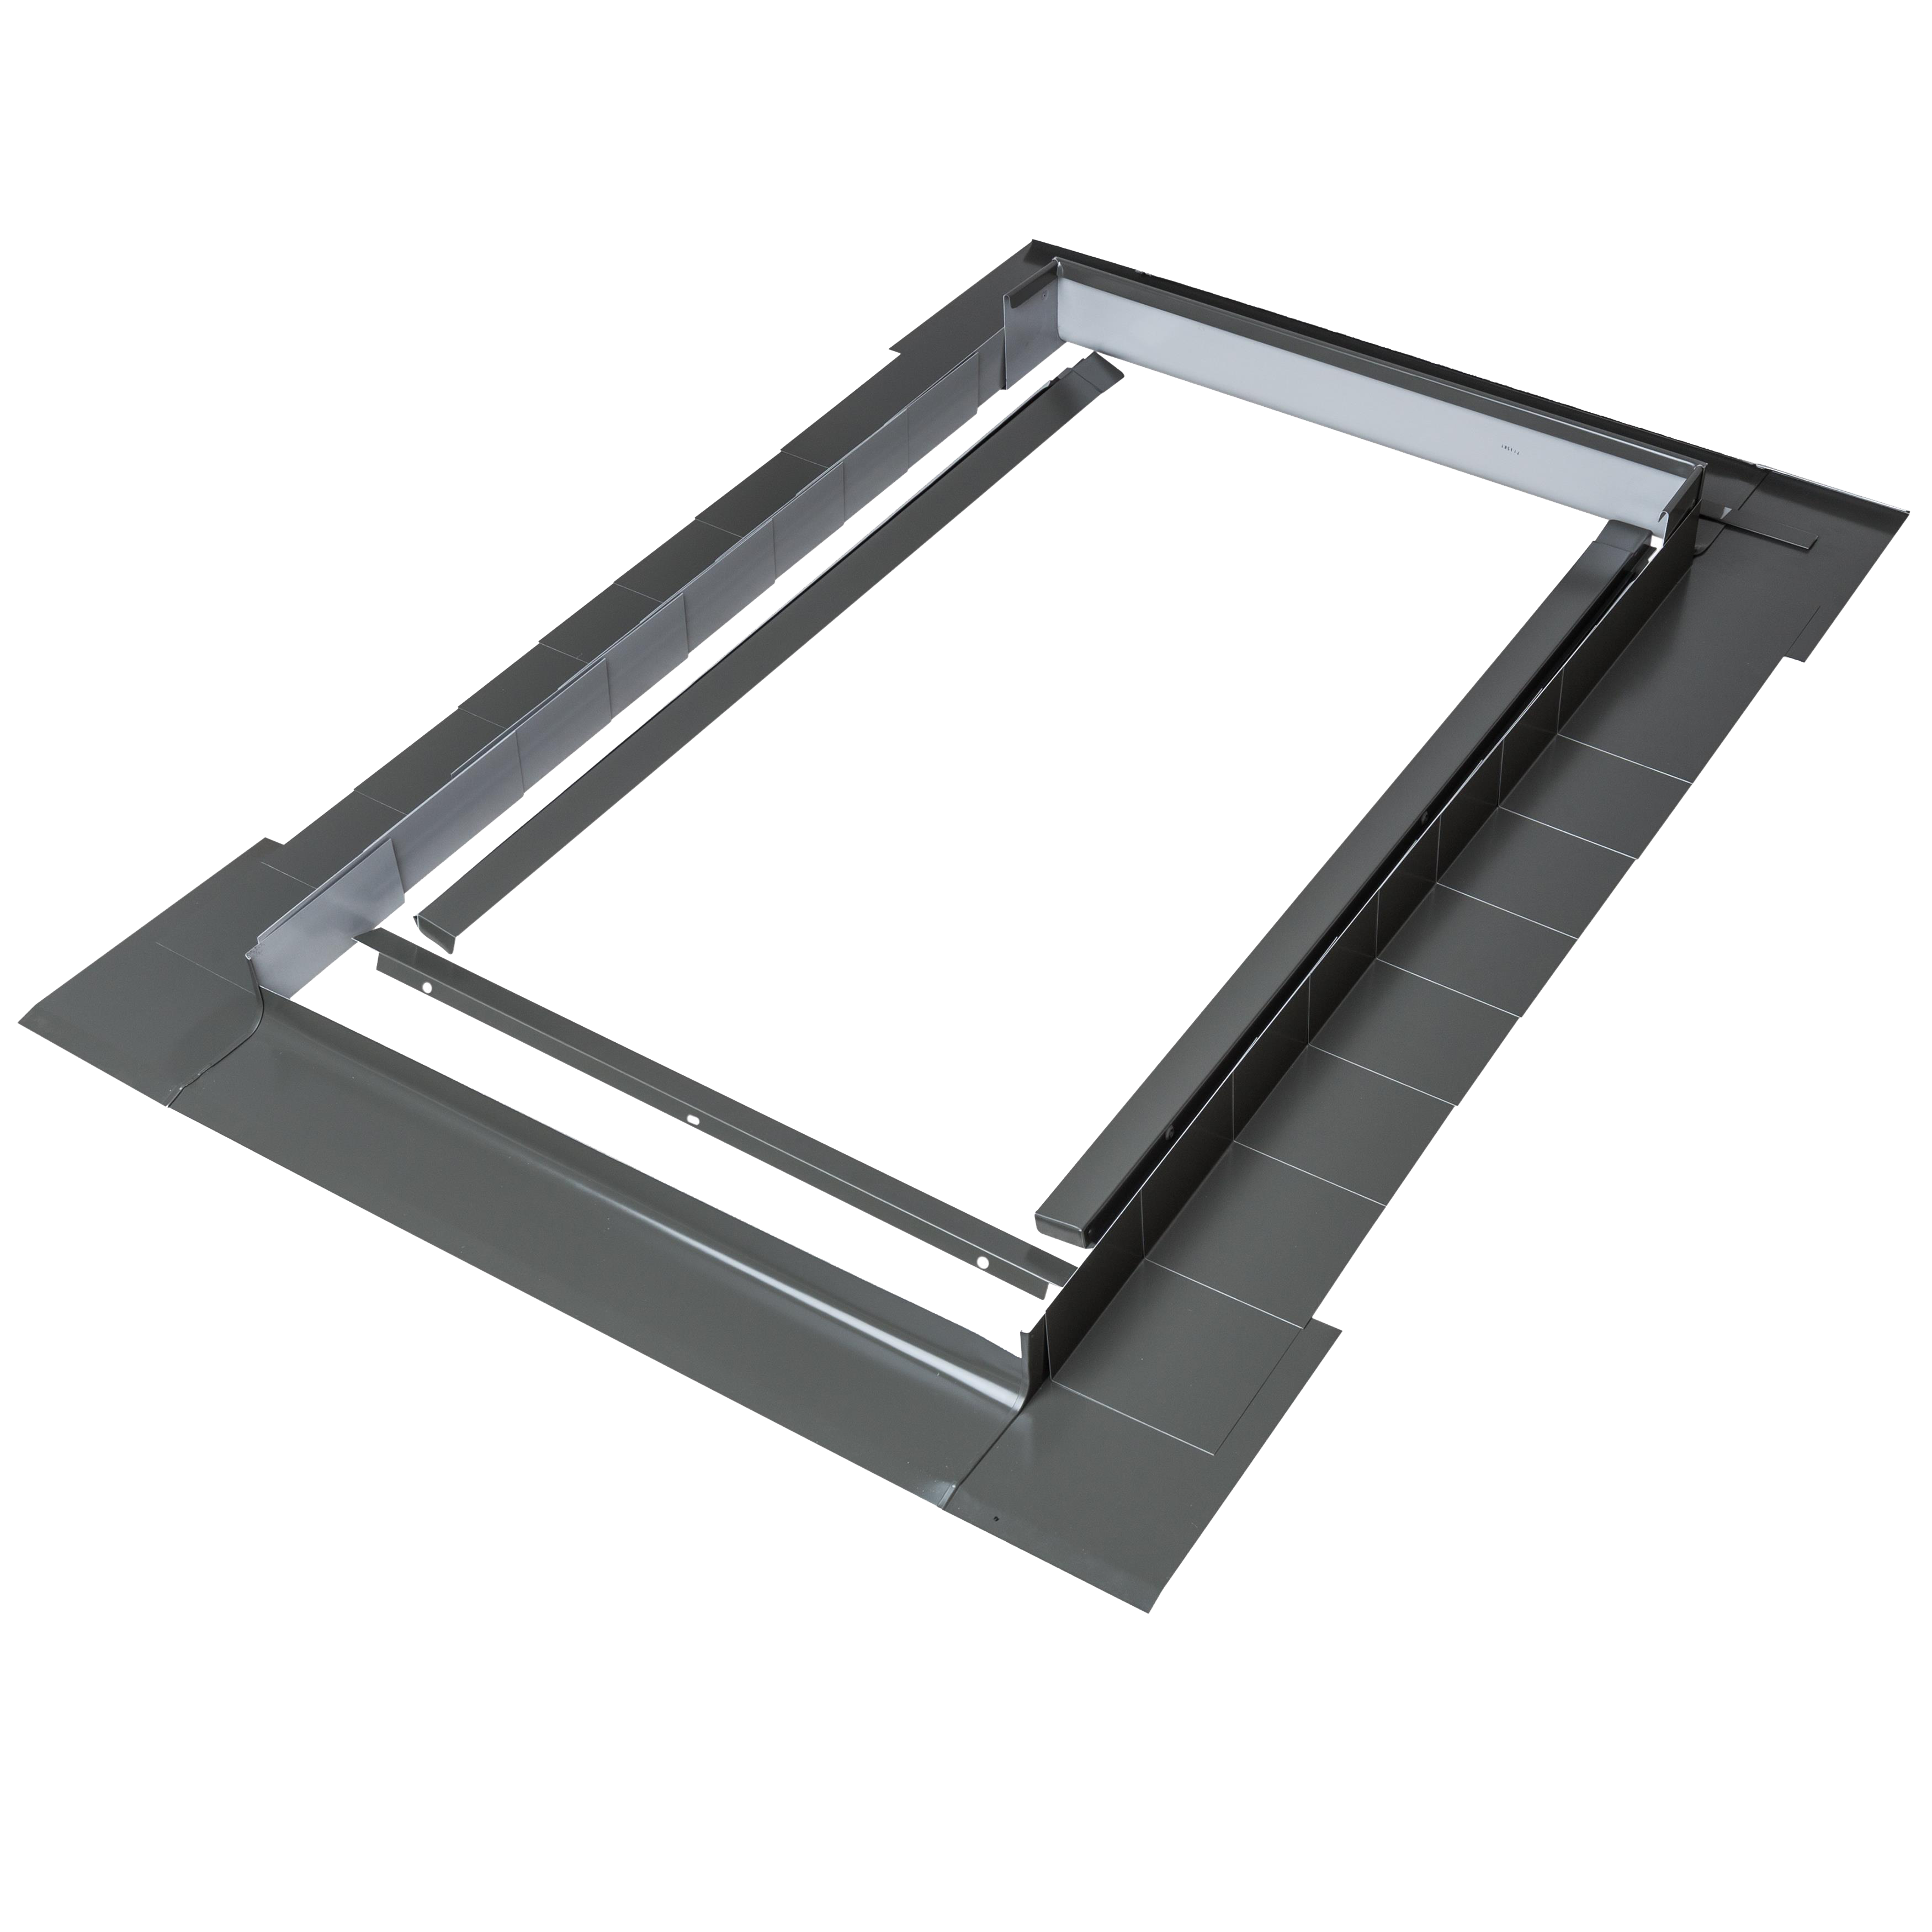 Tapajuntas ventana de tejado plano de aluminio fakro de 55 x 118 cm